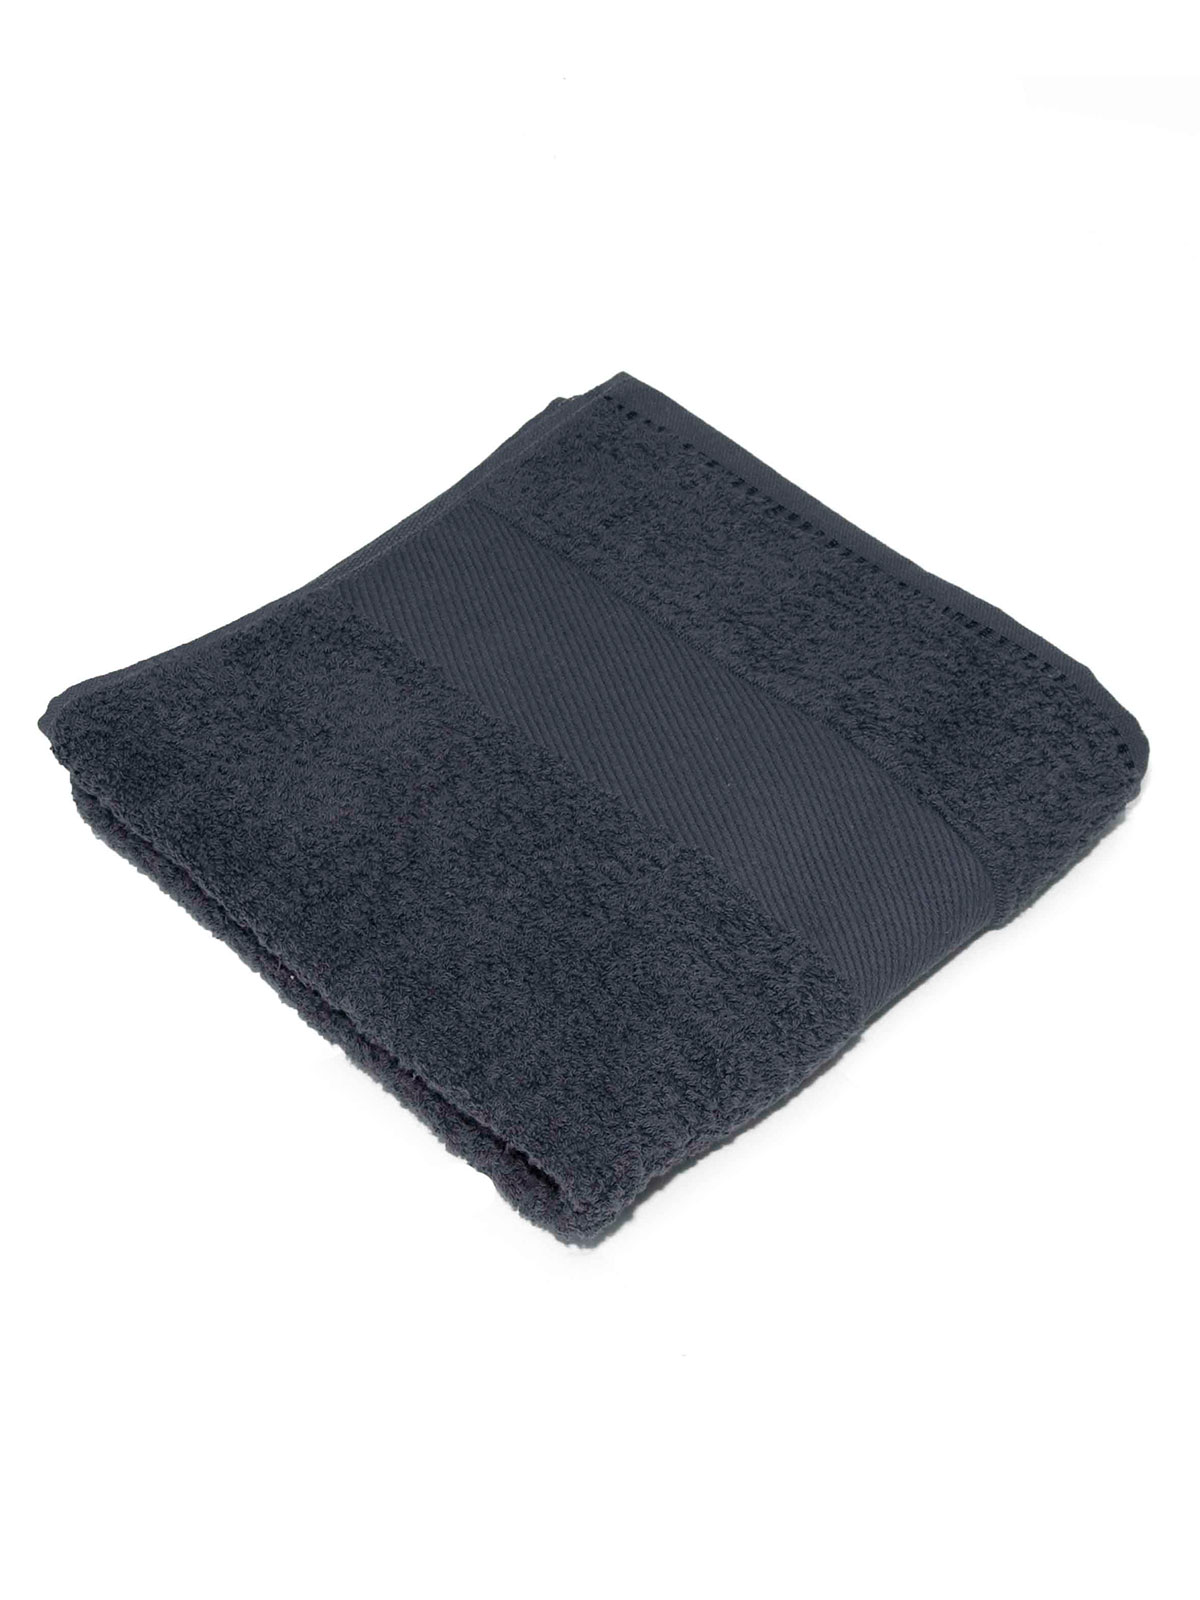 classic-towel-100x160-anthracite-grey.webp